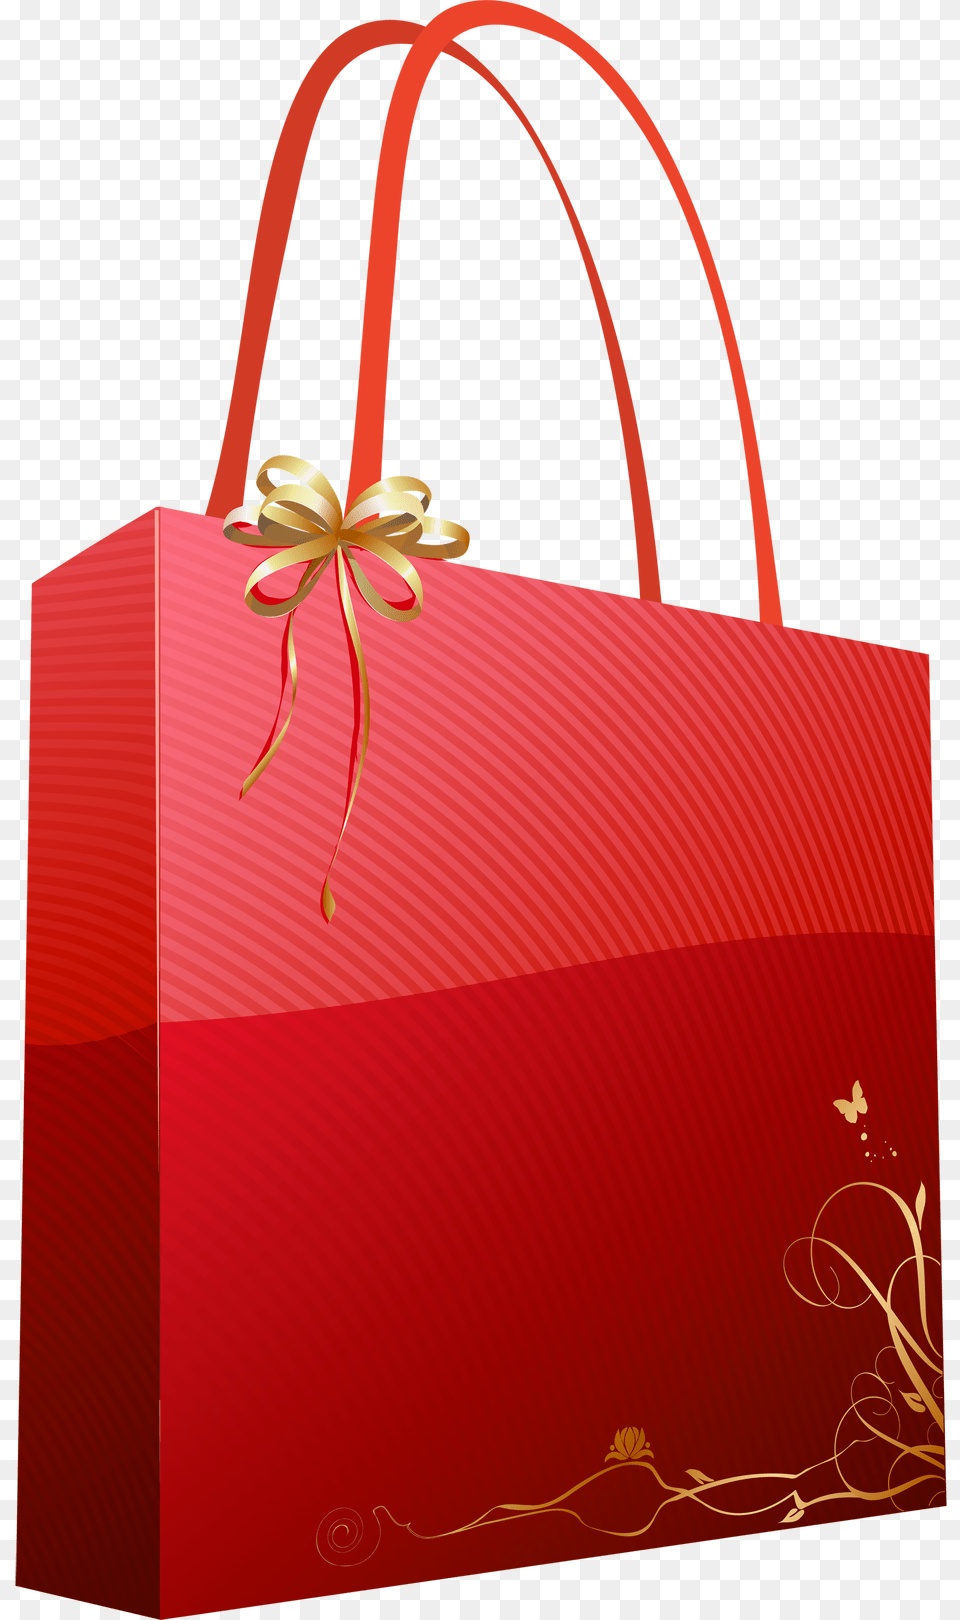 Red Giftbag, Bag, Accessories, Handbag, Shopping Bag Png Image